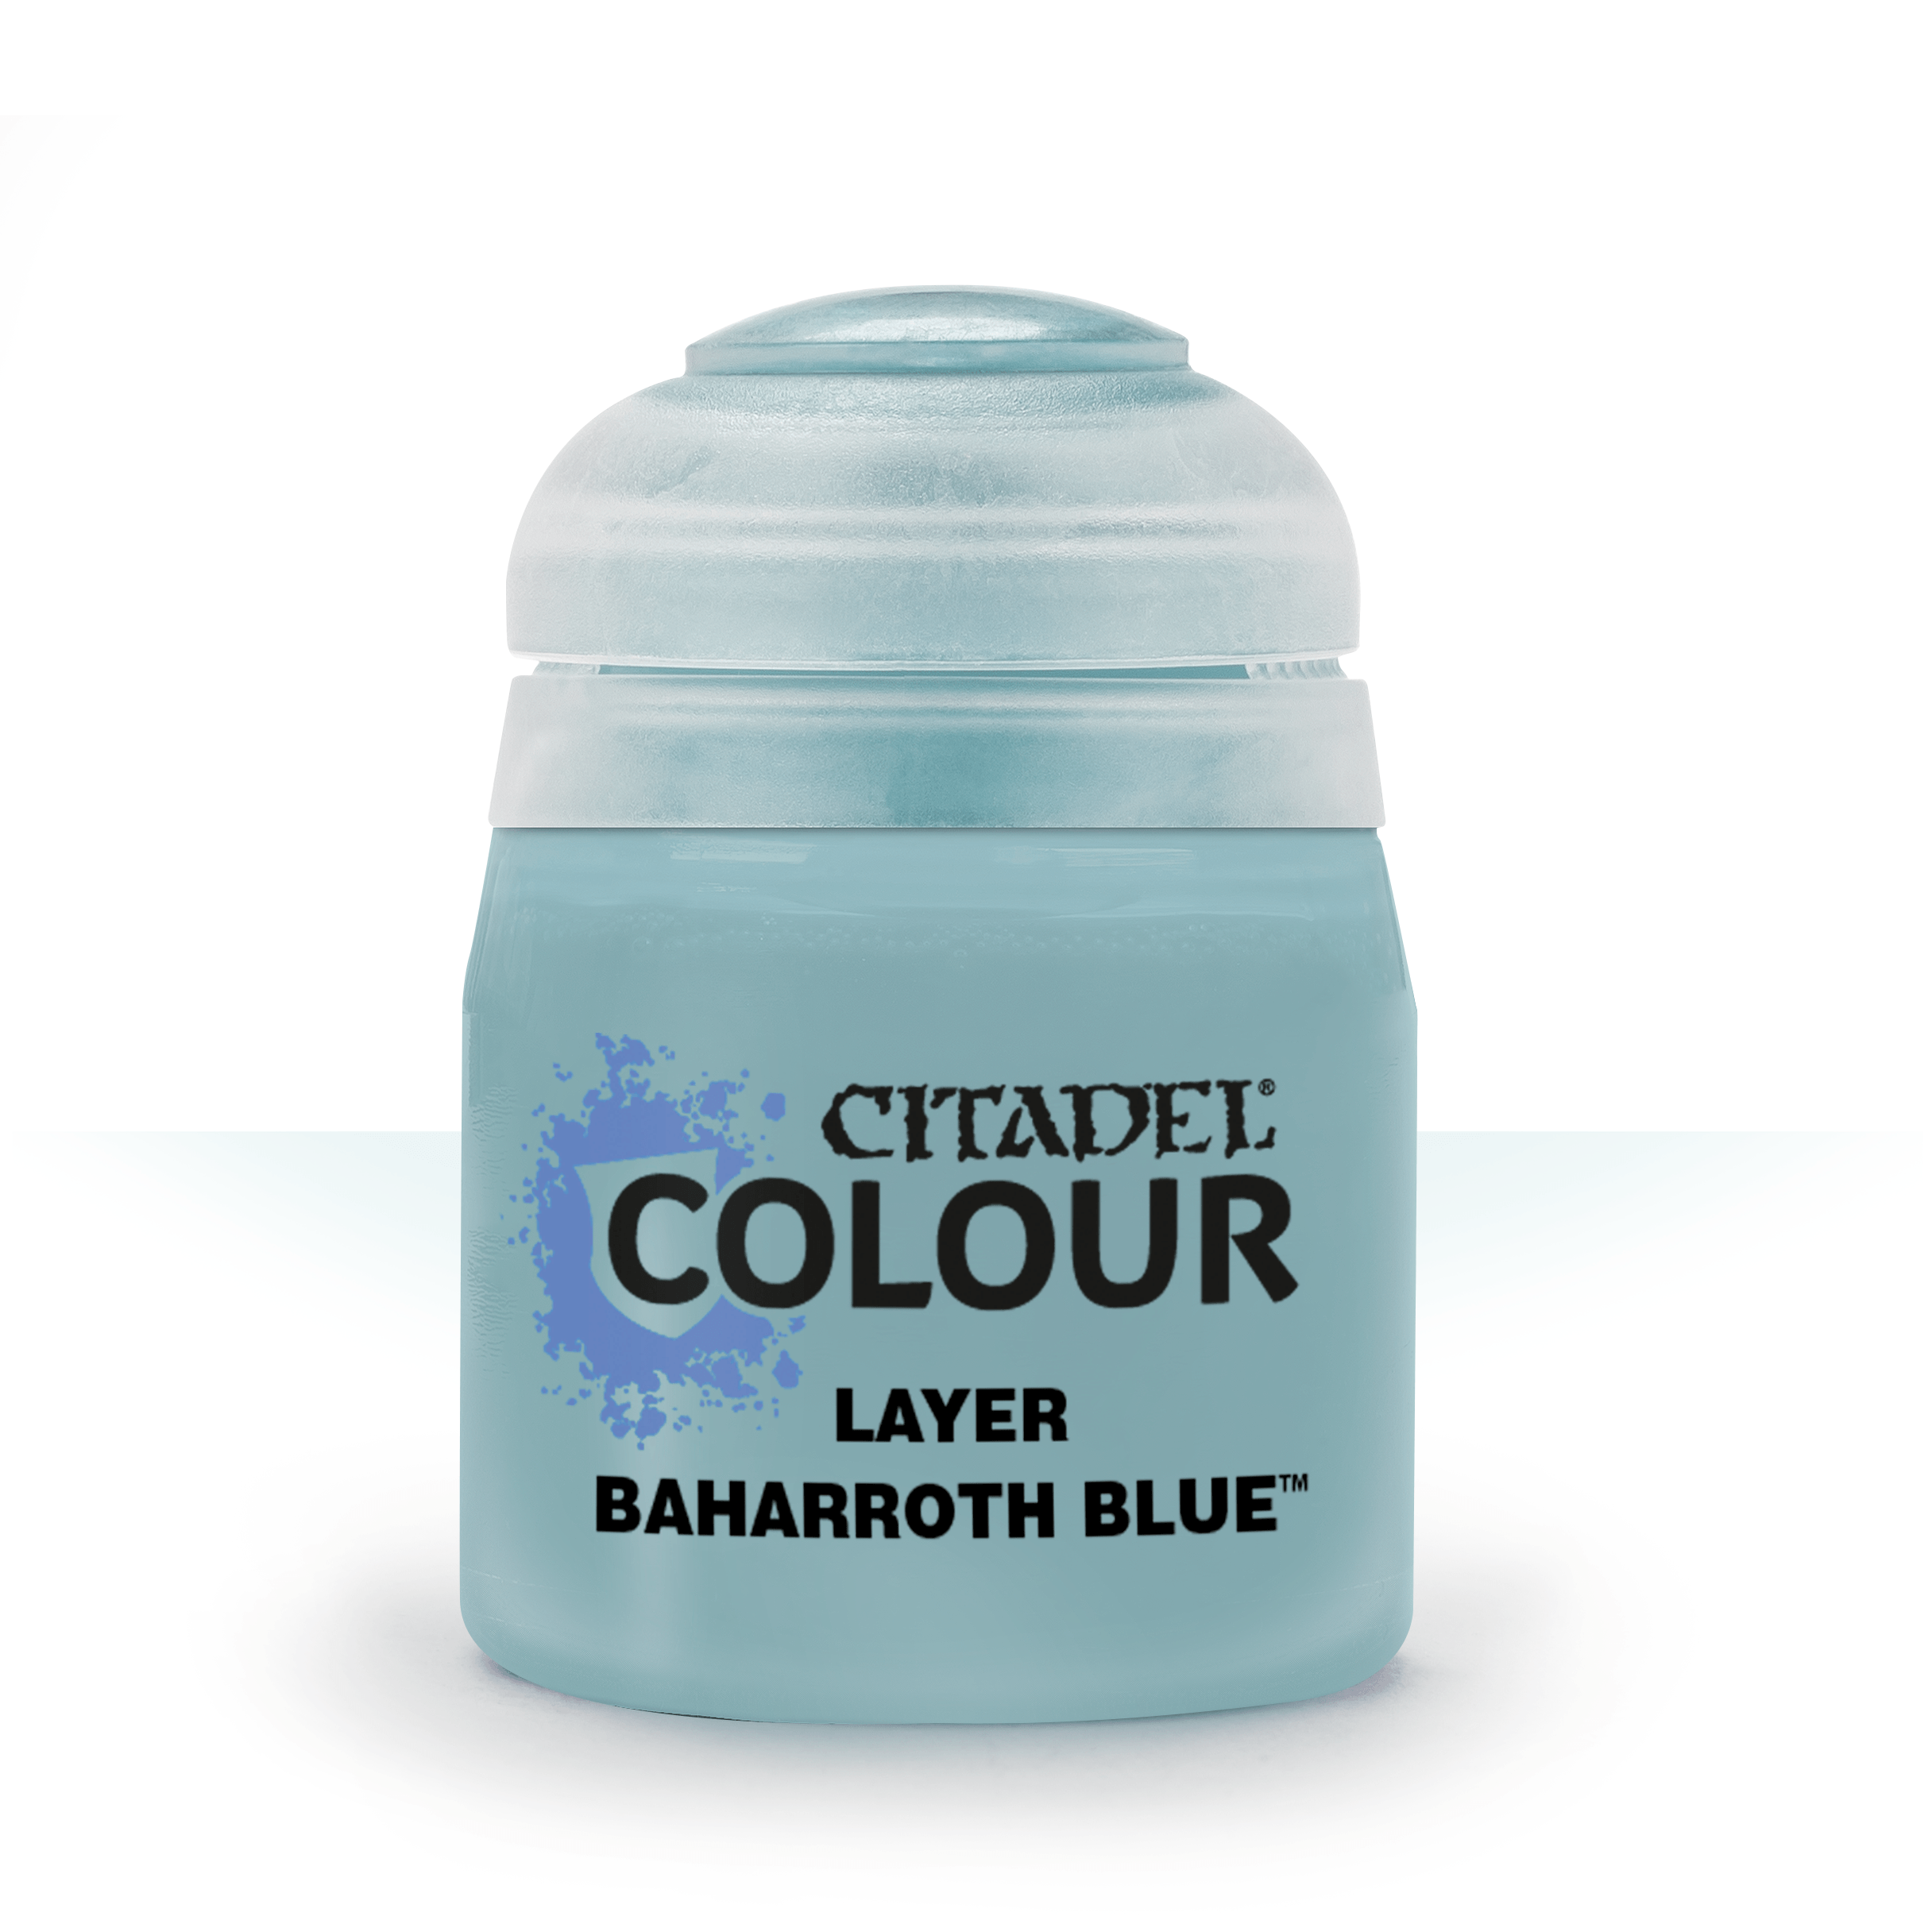 Baharroth Blue - Citadel Layer Colour